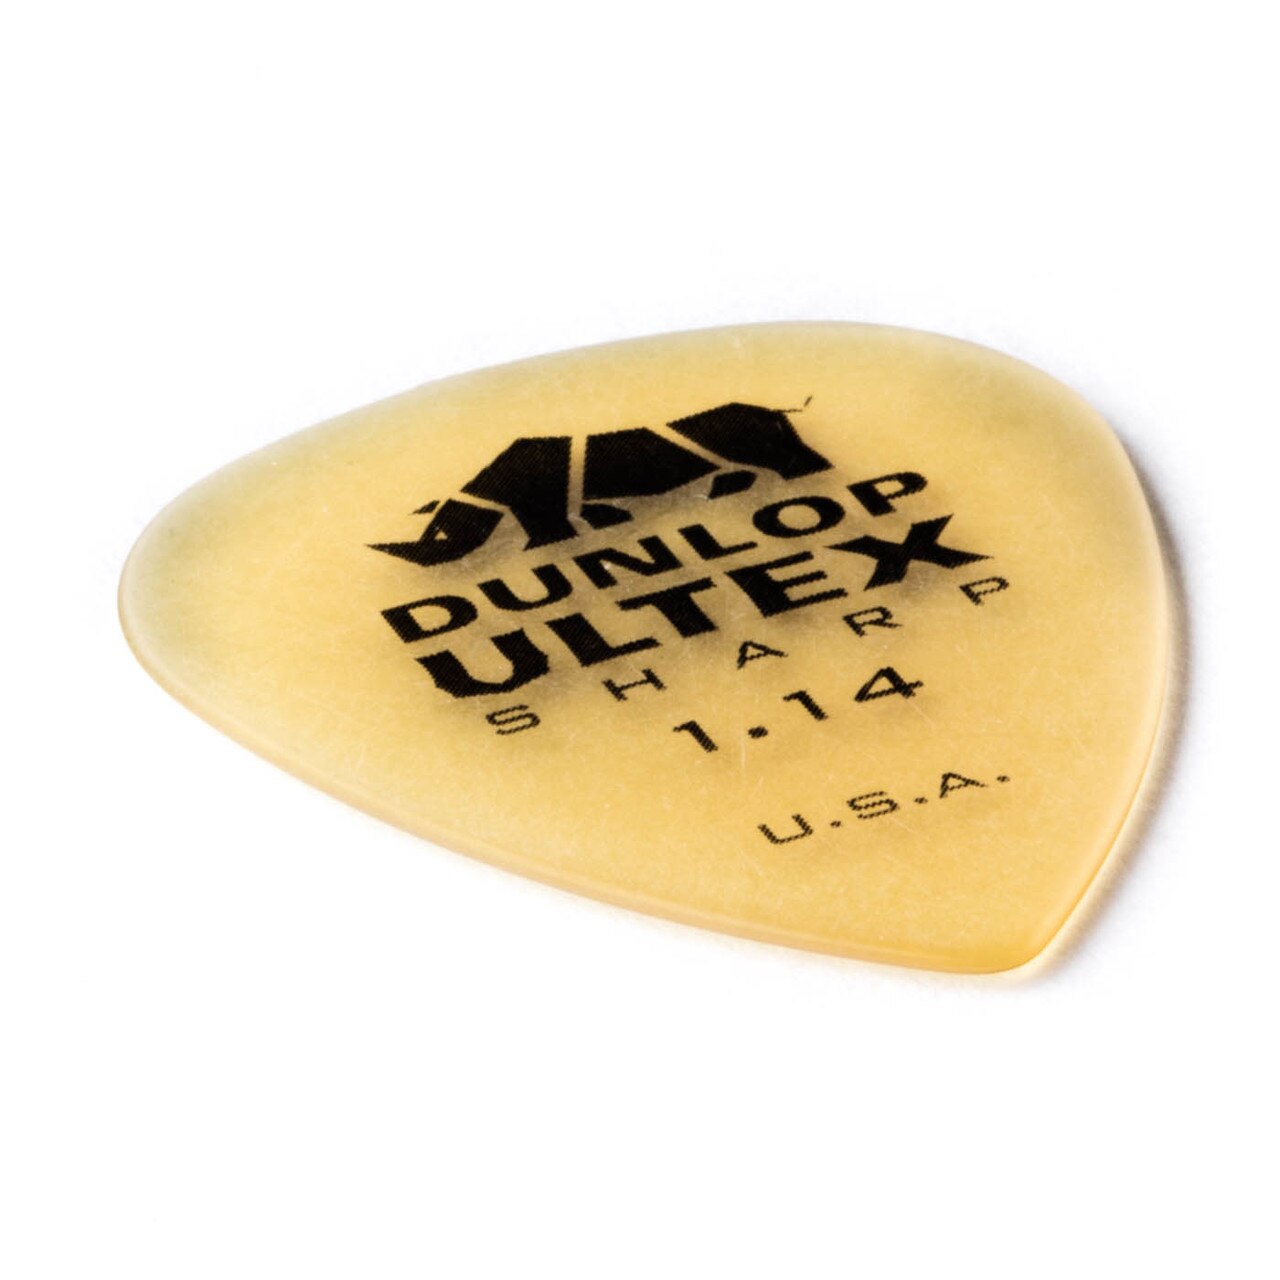 Jim Dunlop Ultex Sharp 433 1.14mm - Guitar pick - Variation 1